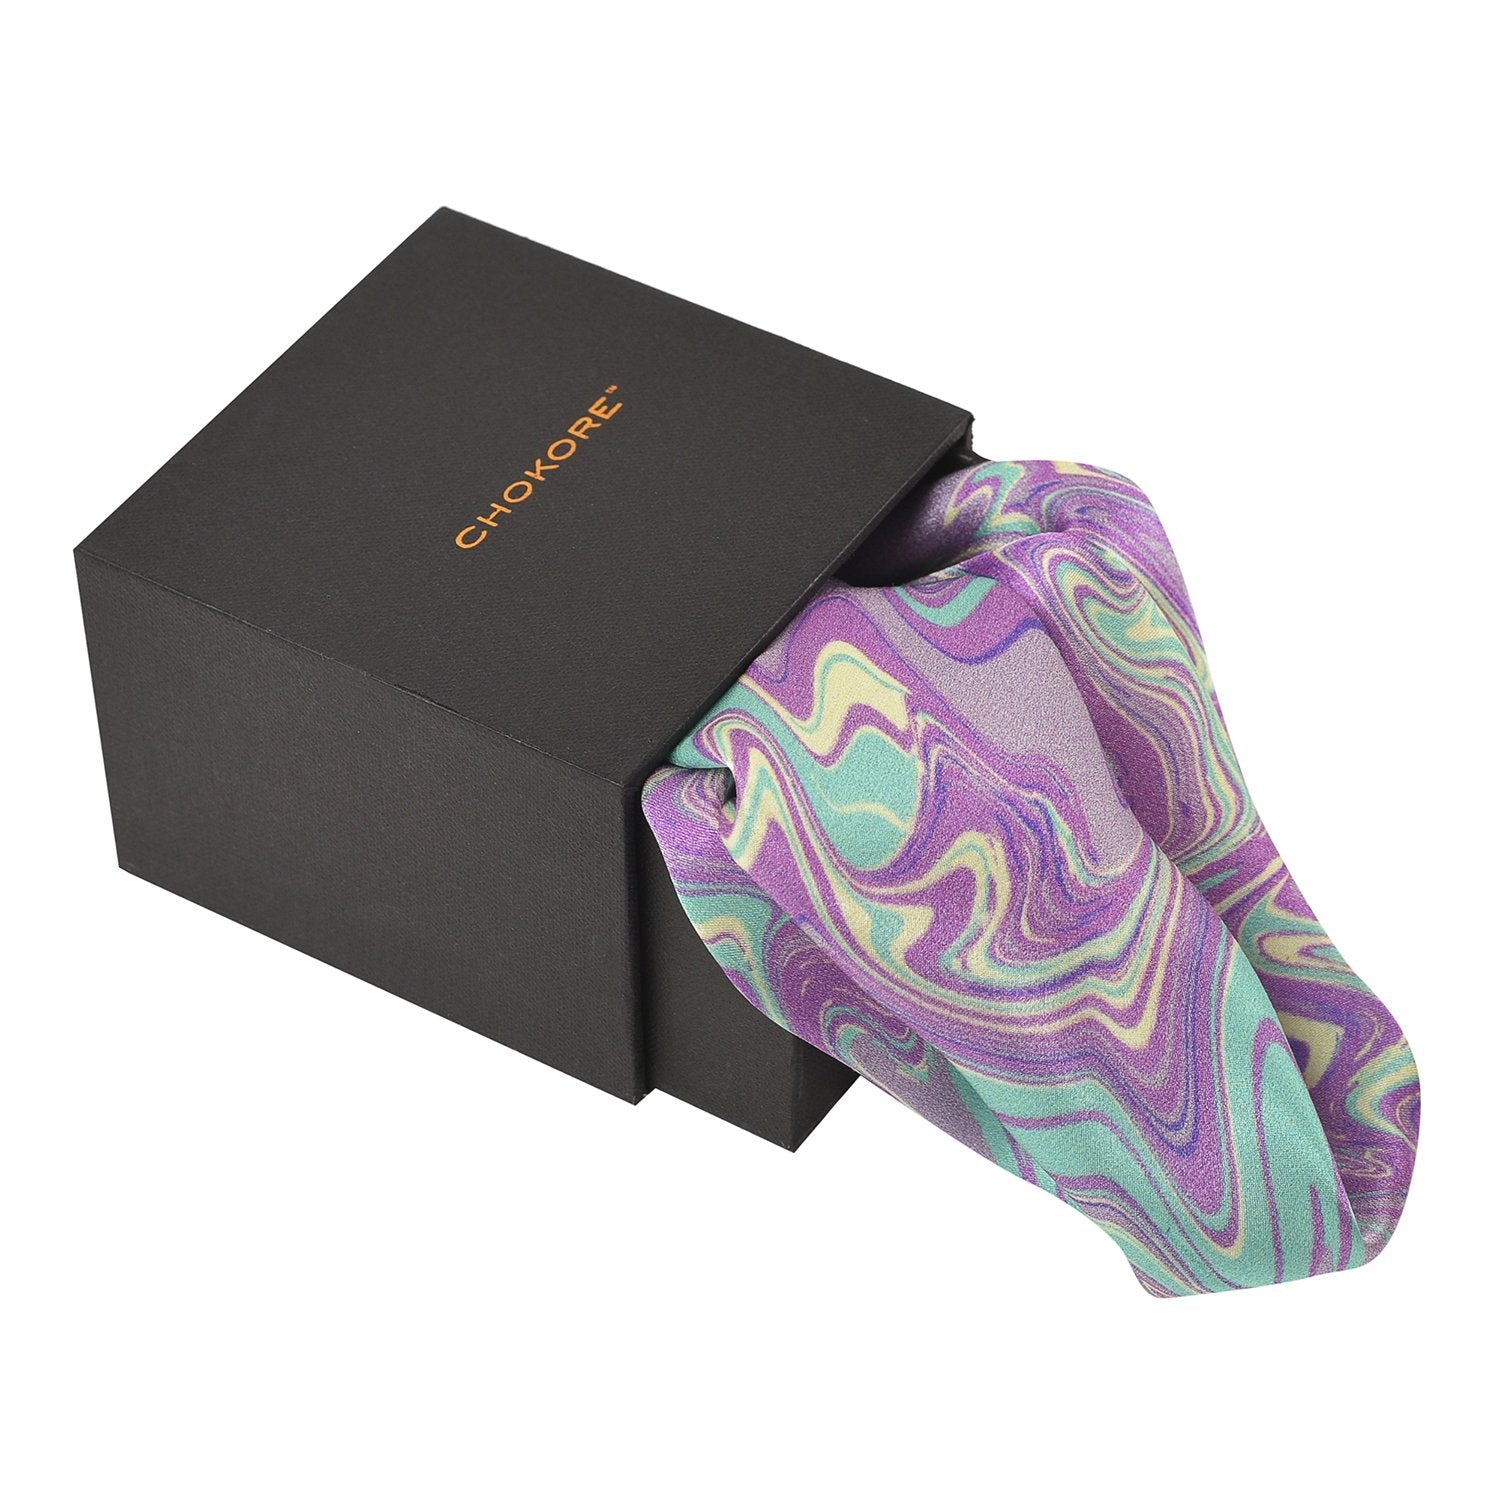 Chokore Purple Silk Pocket Square from the Marble Design range